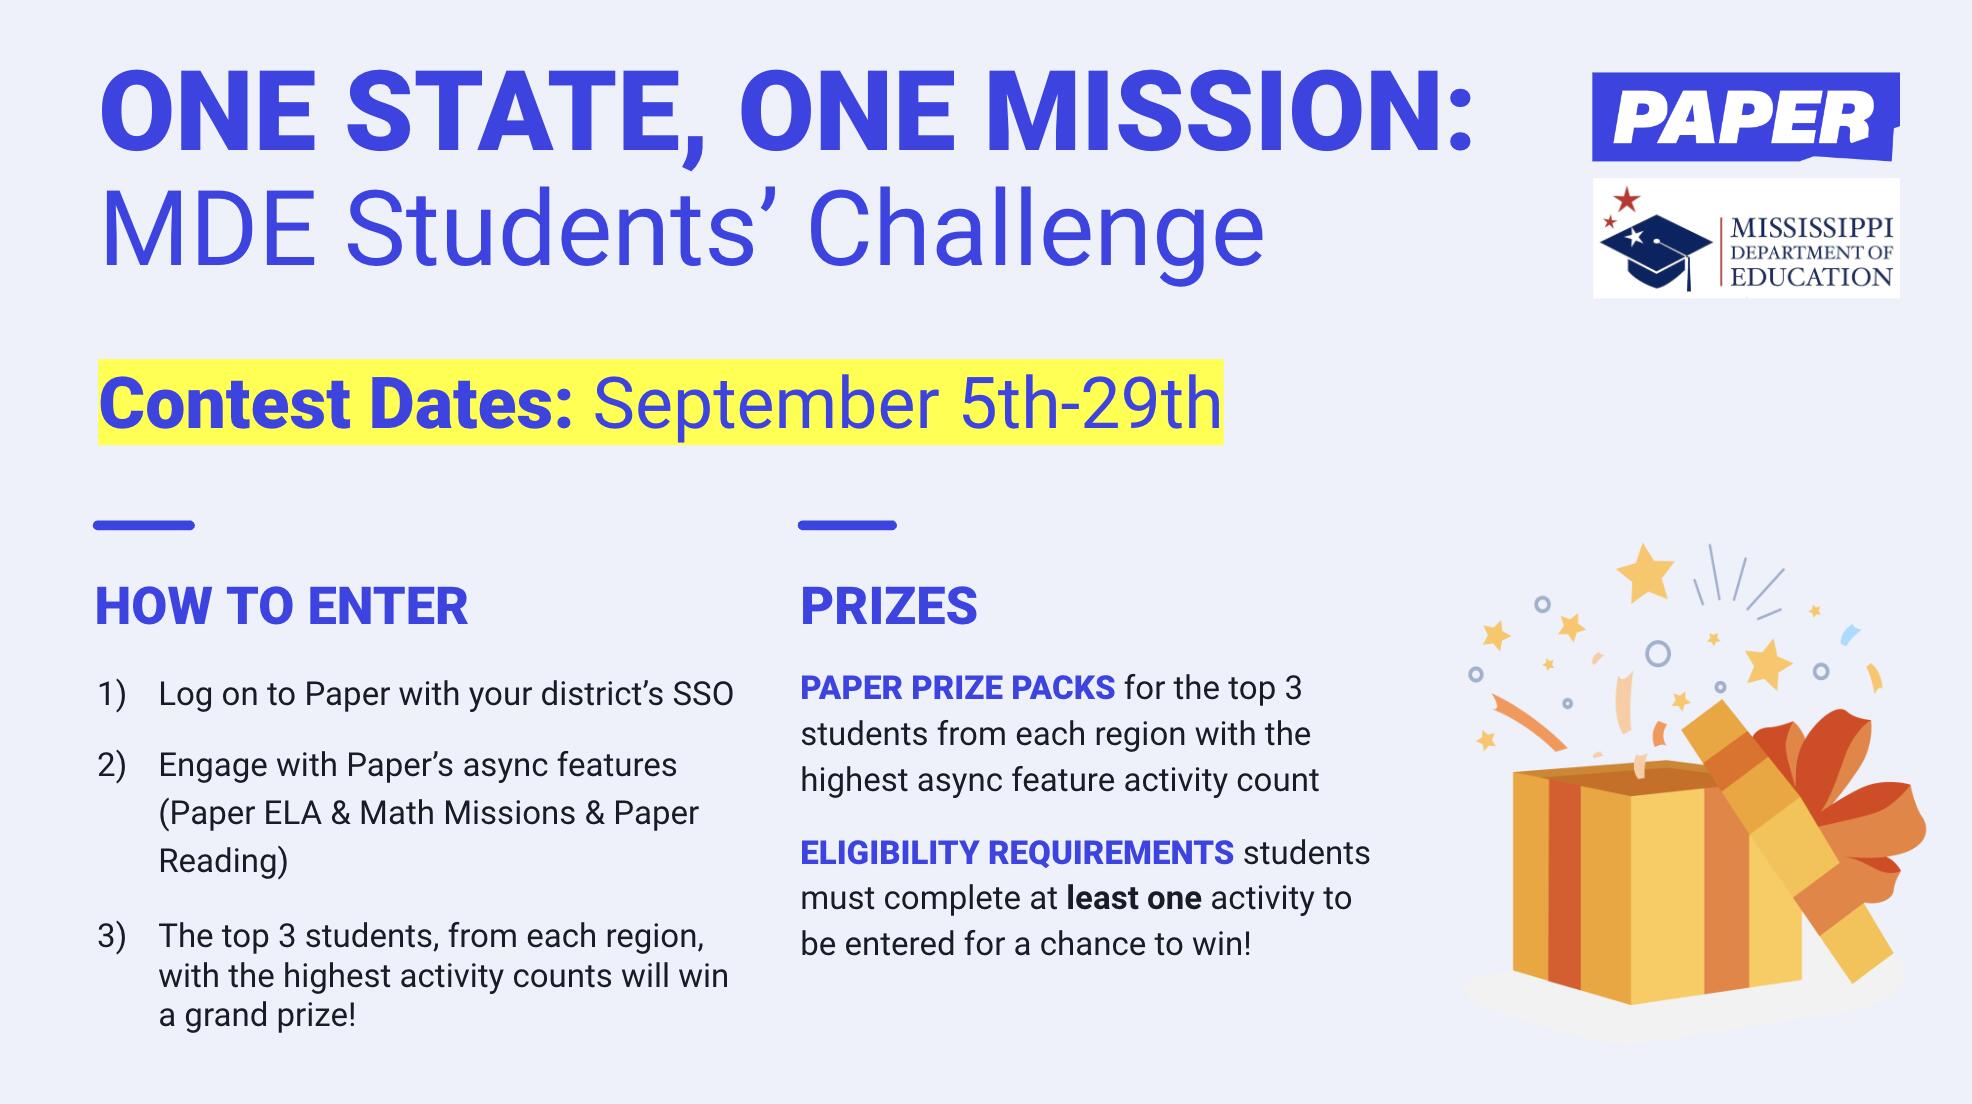 MDE Student's Challenge contest